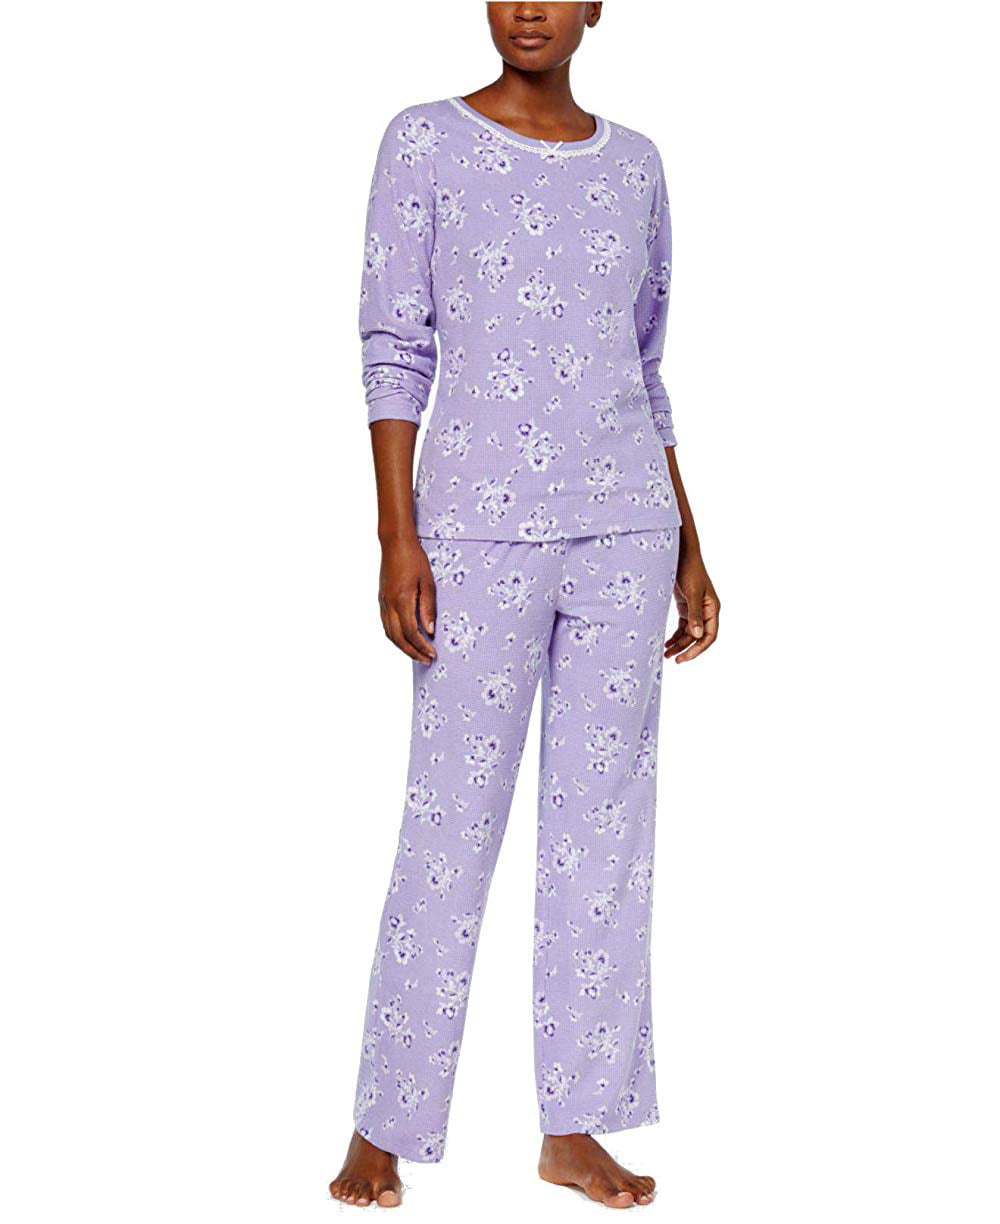 2XL Charter Club Thermal Soft Fleece Printed Pajama Set  Ivory Rose Floral  XL